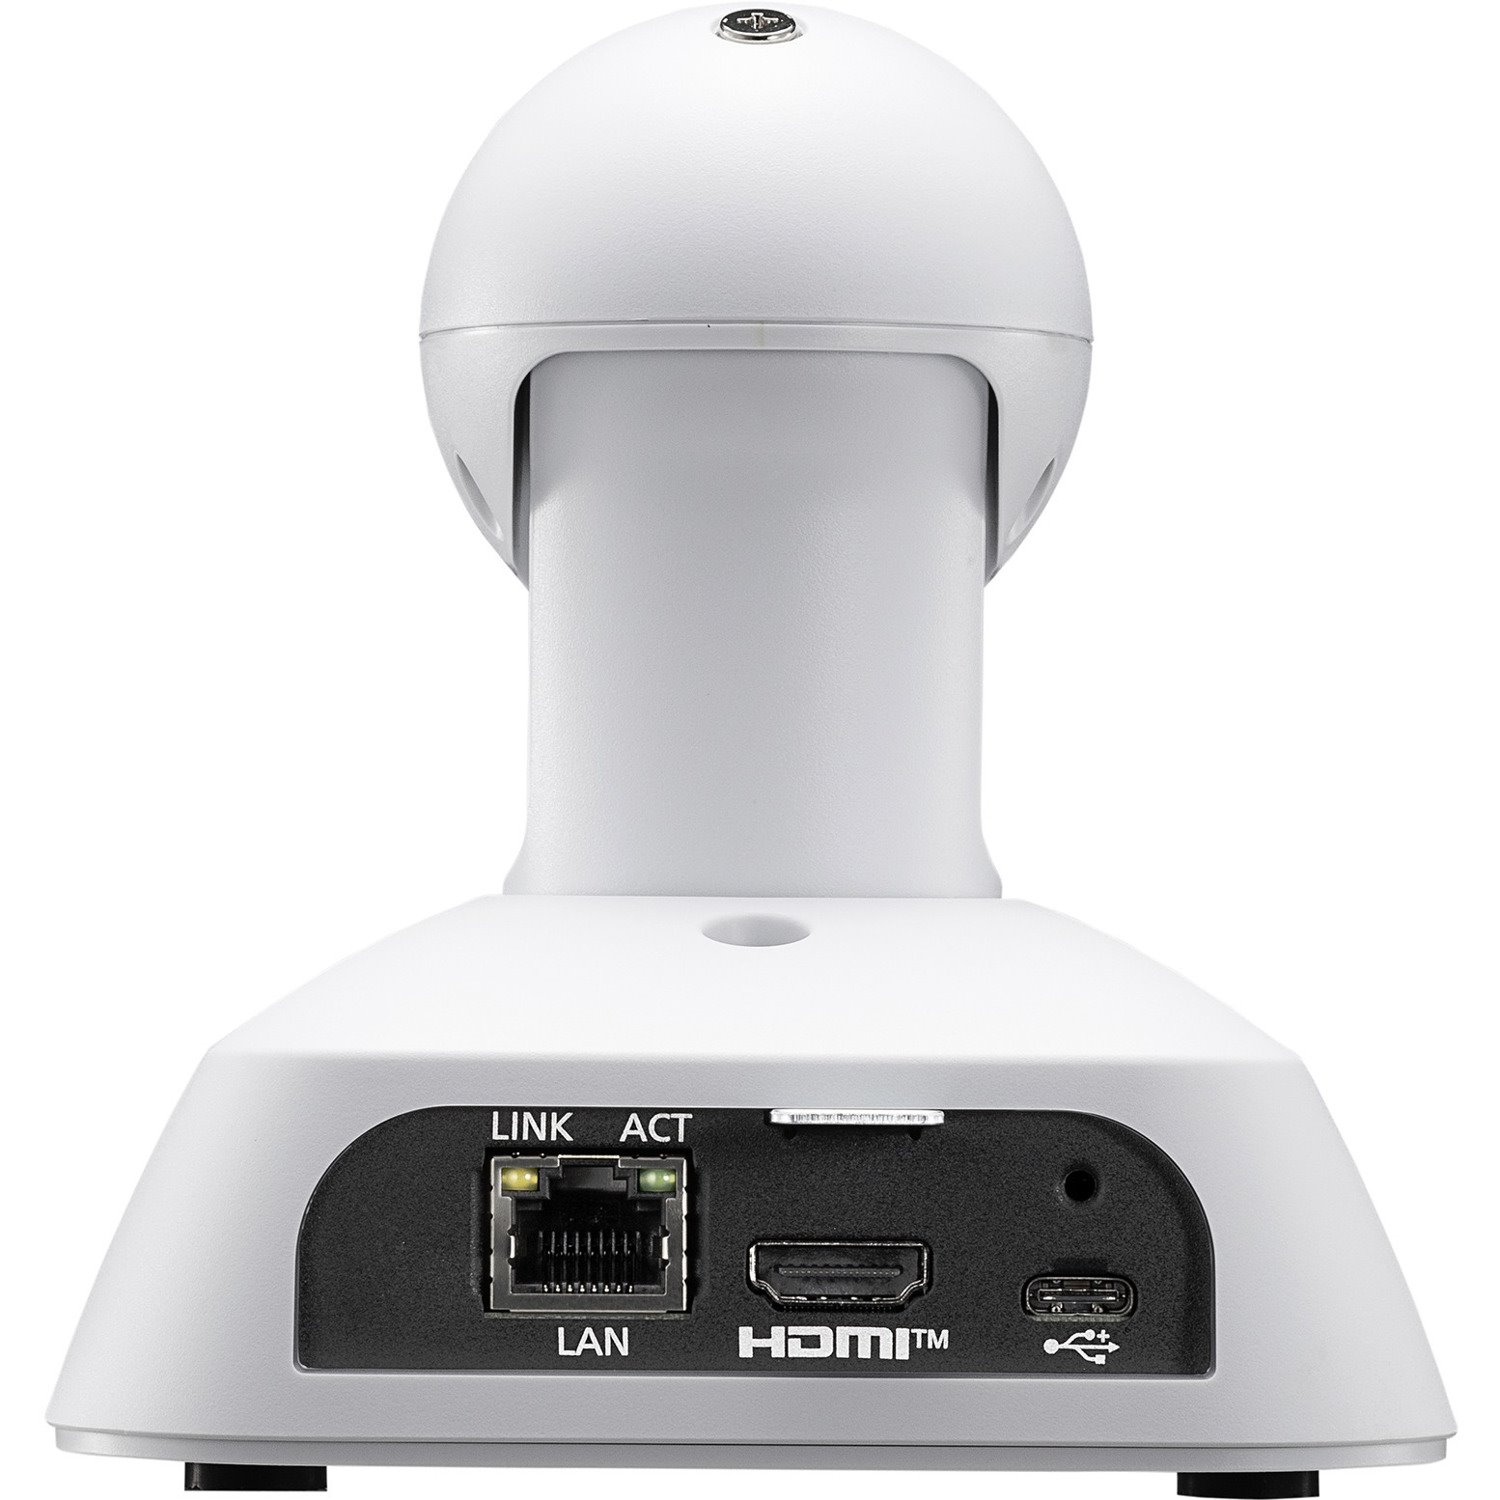 Panasonic AW-UE4WG Video Conferencing Camera - White - USB